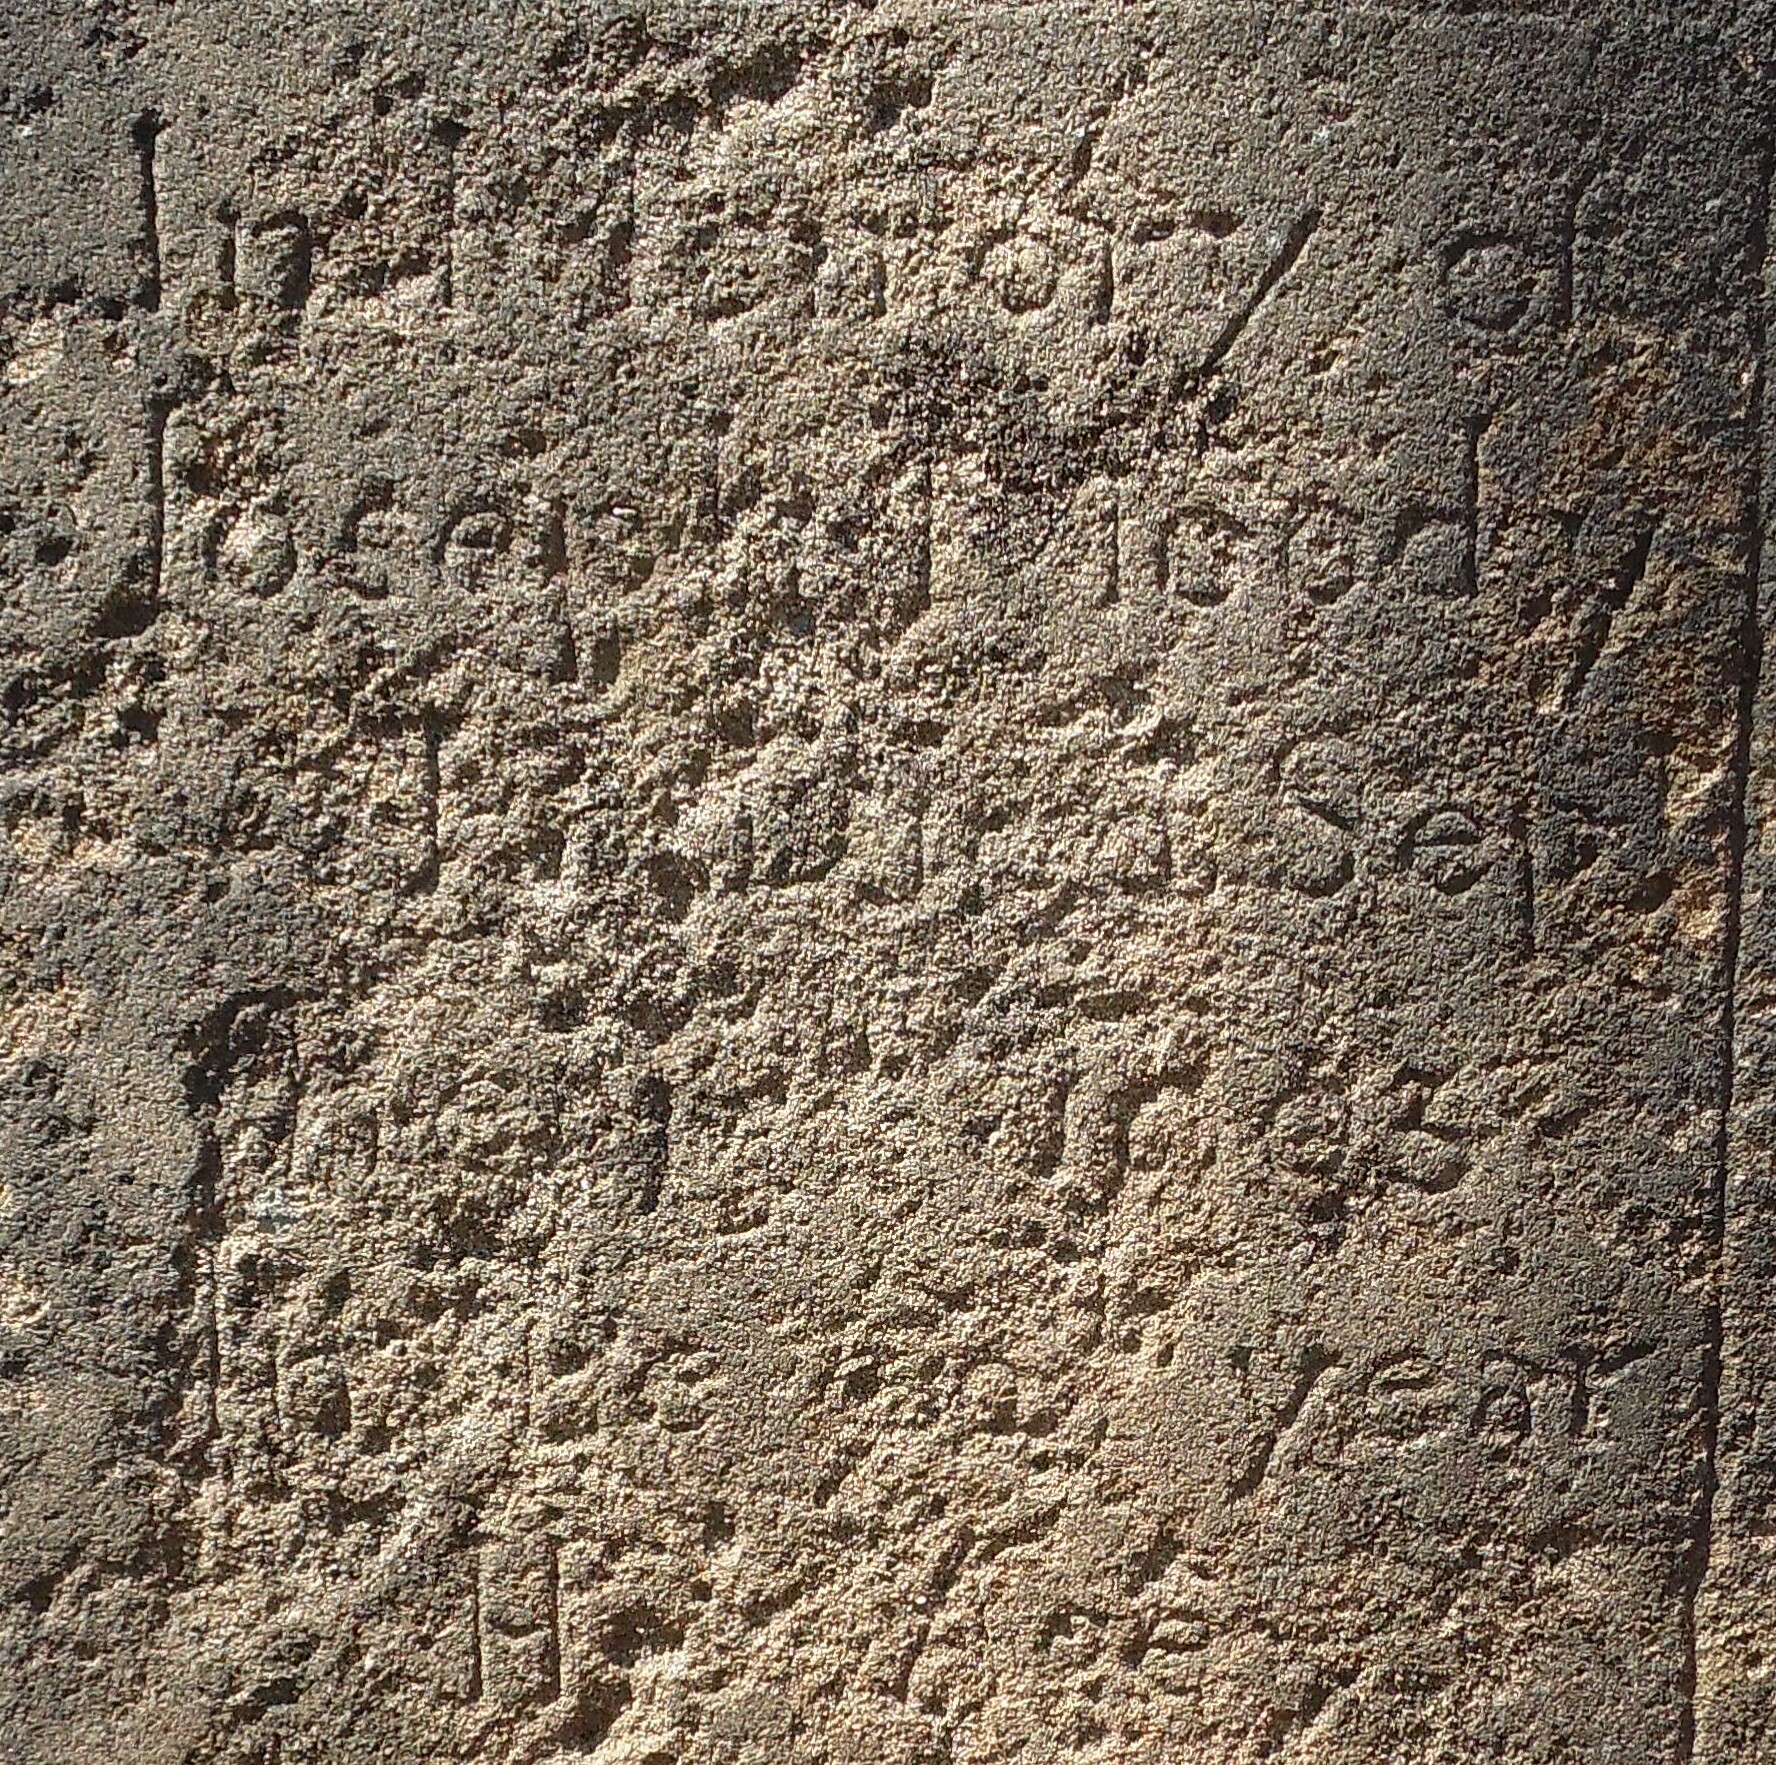 Close-up of Joseph's grave